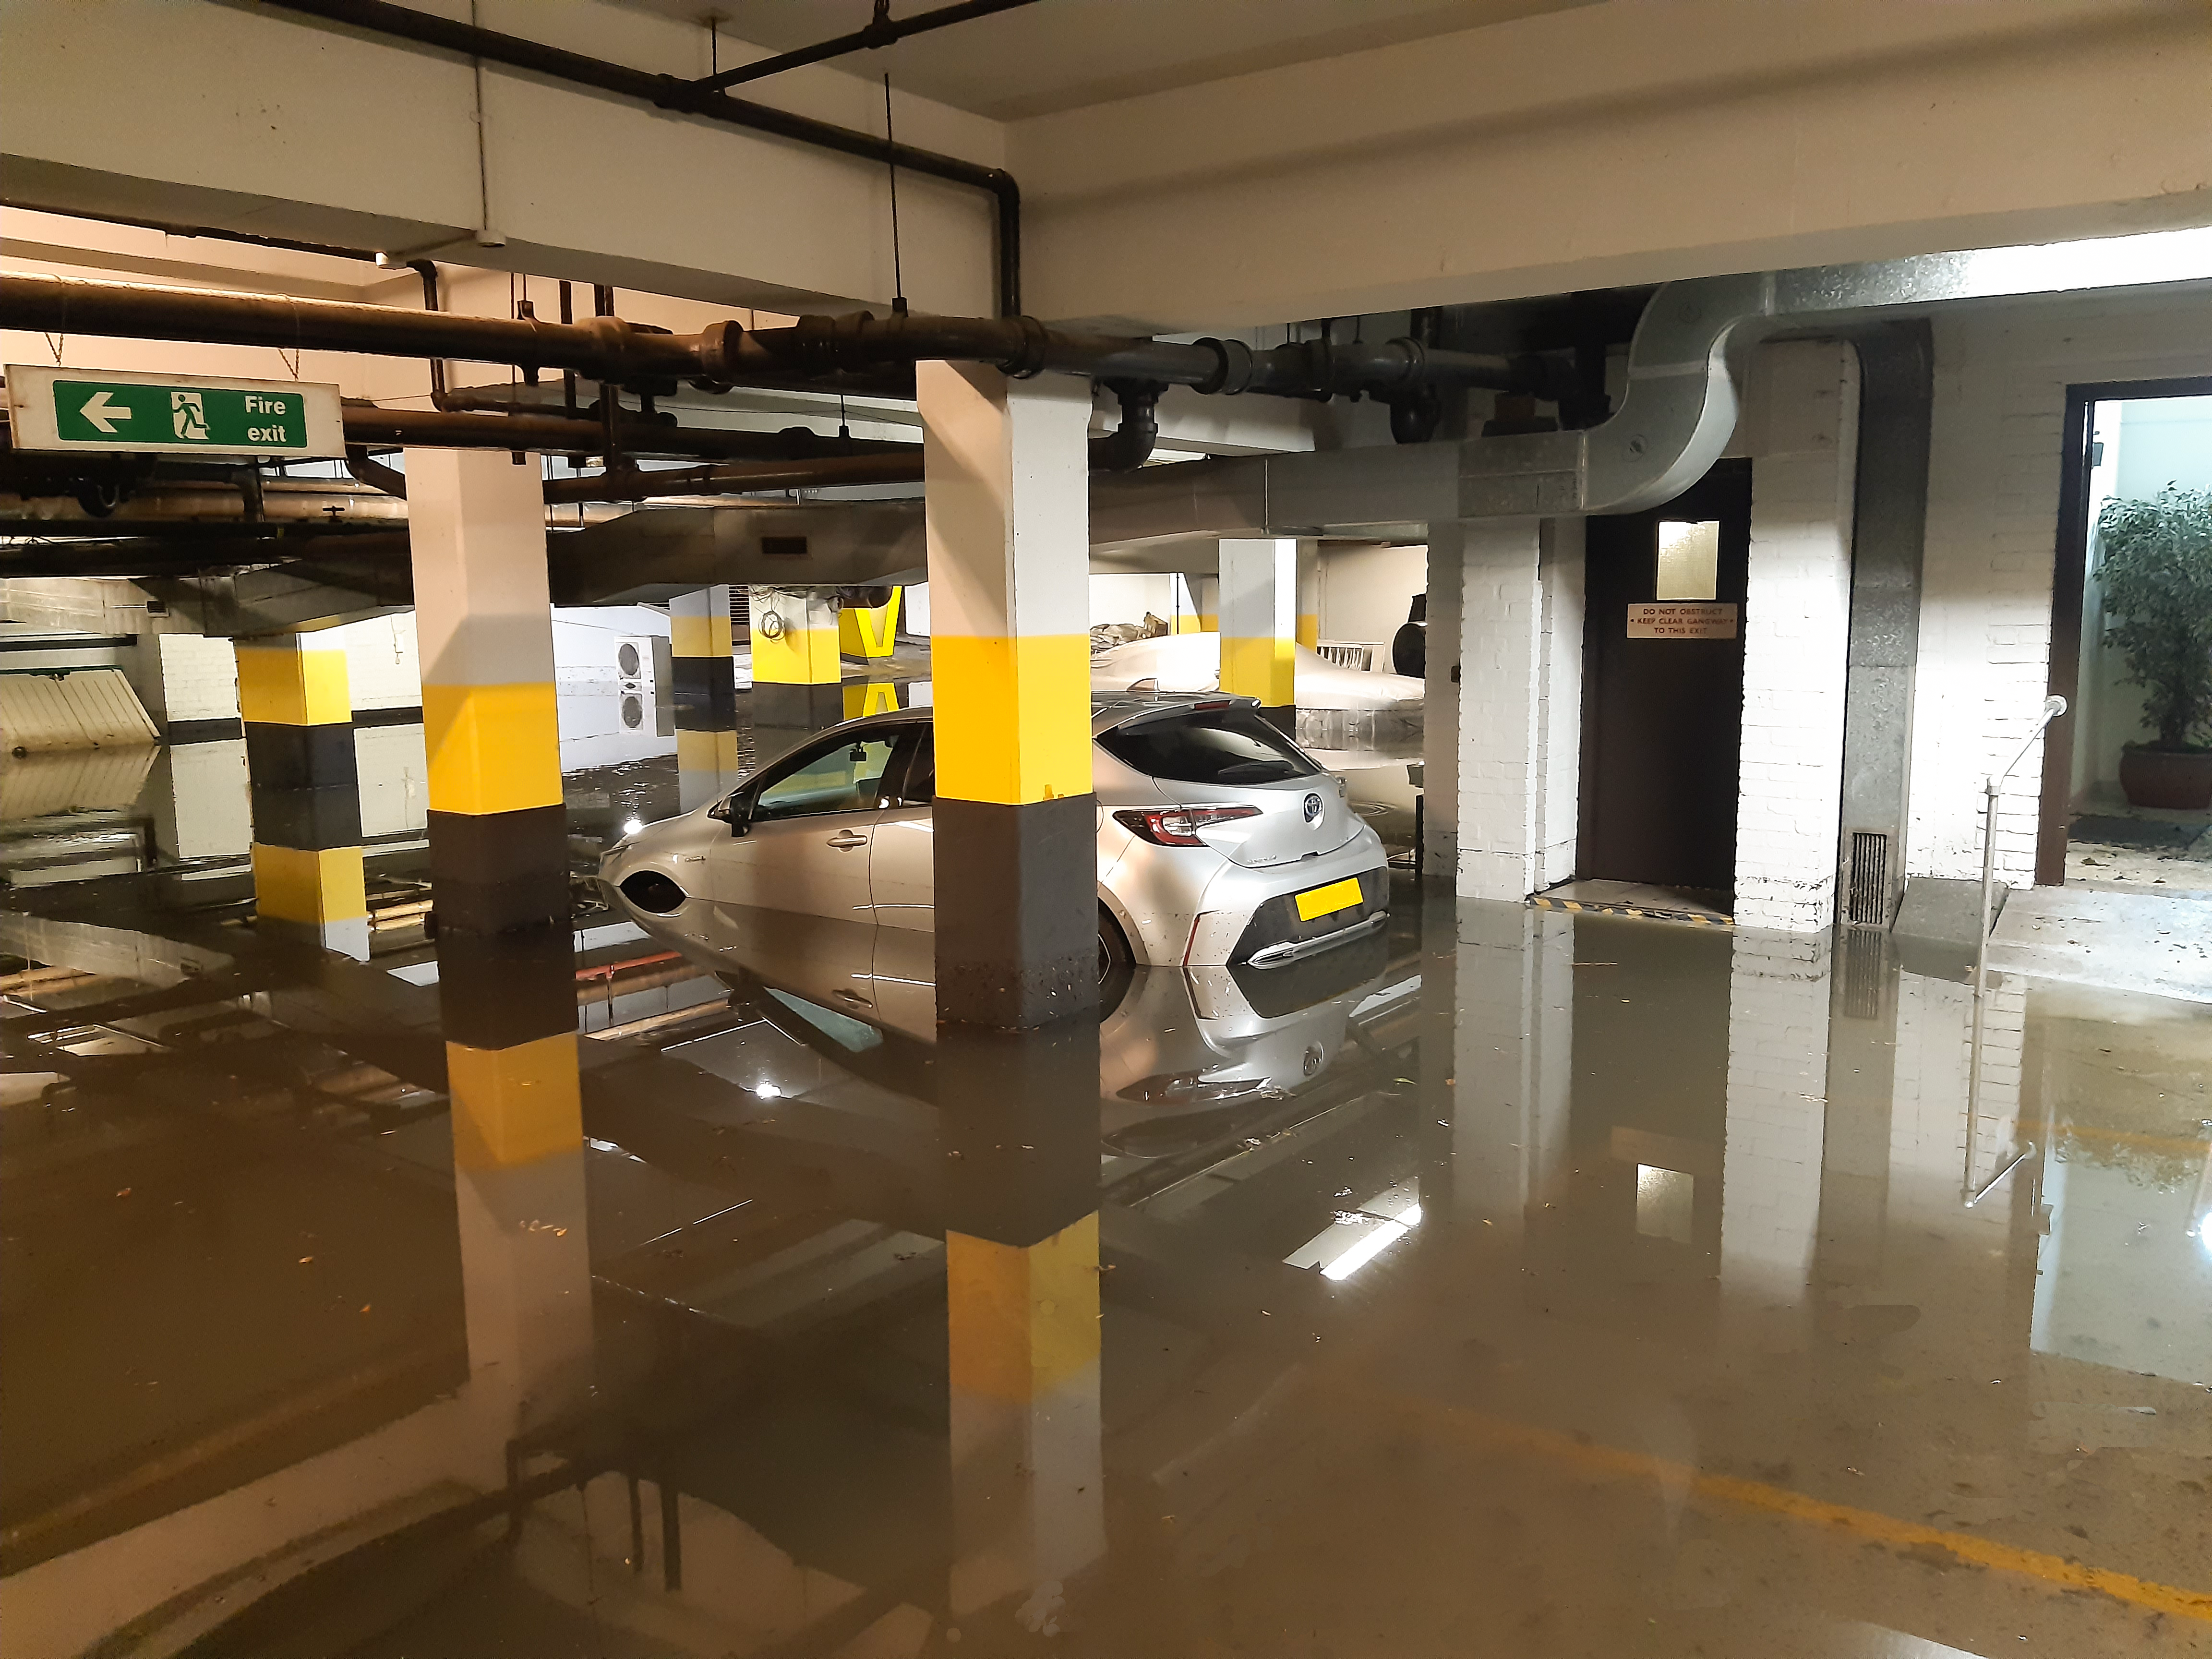 Flooded car park with sinking car